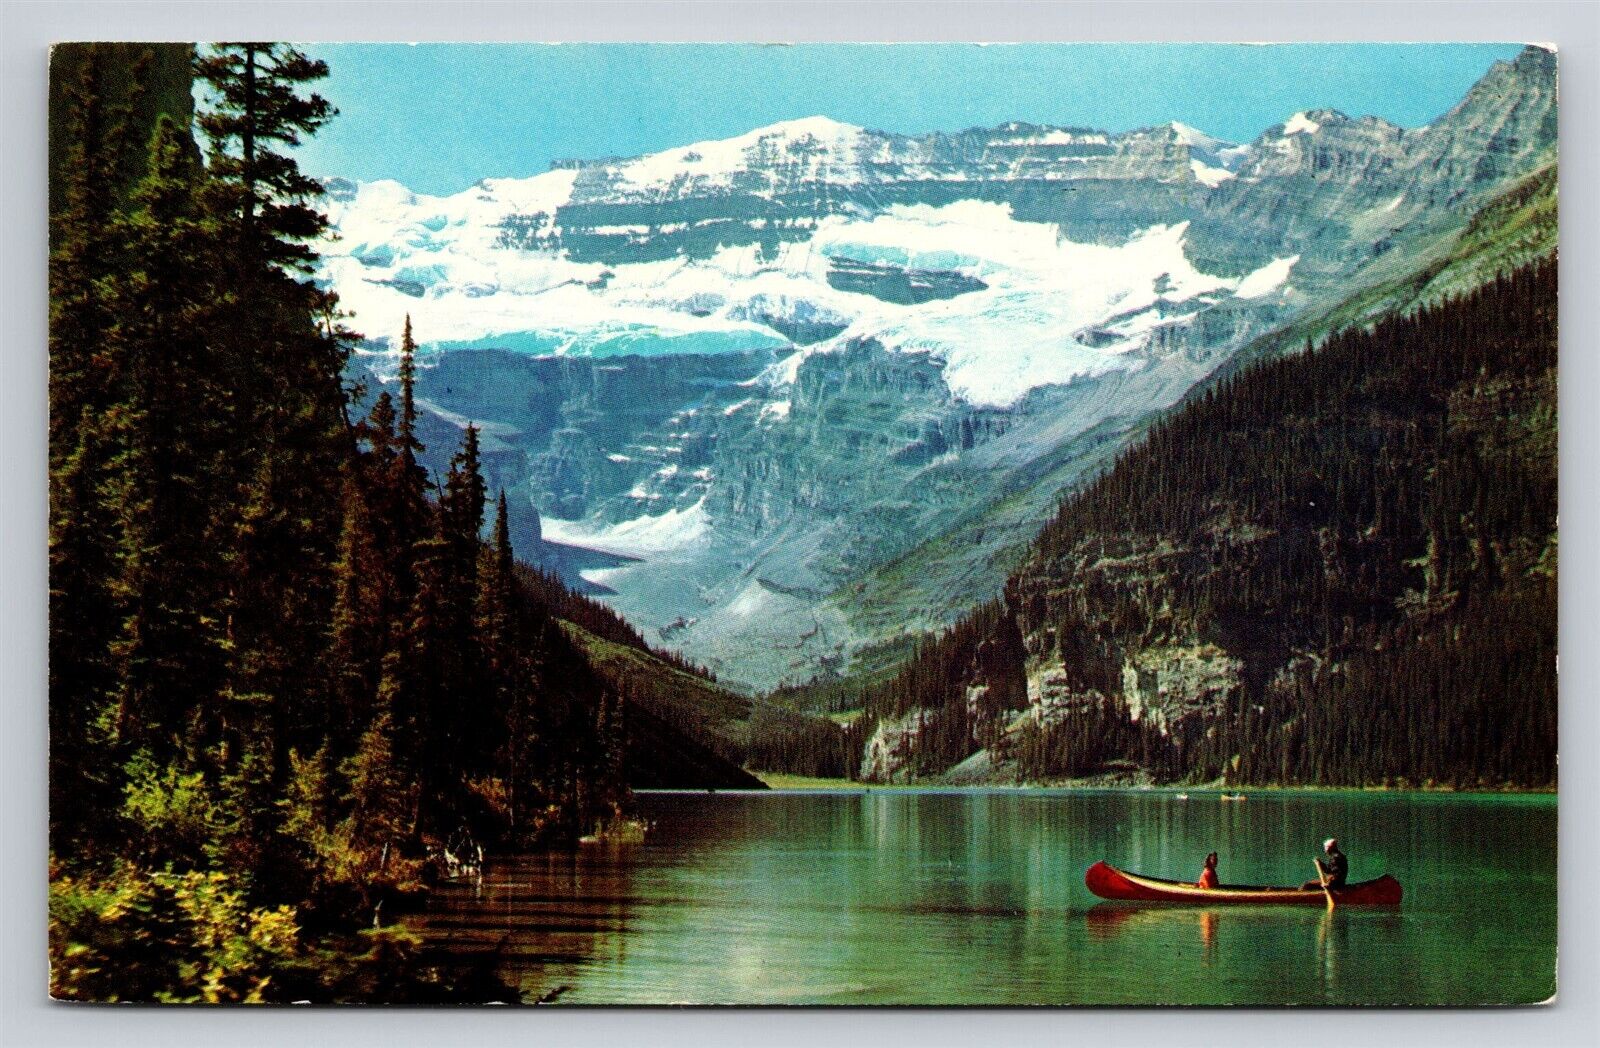 Lake Louise Victoria Glacier Canadian Rockies Banff National Park AB Postcard